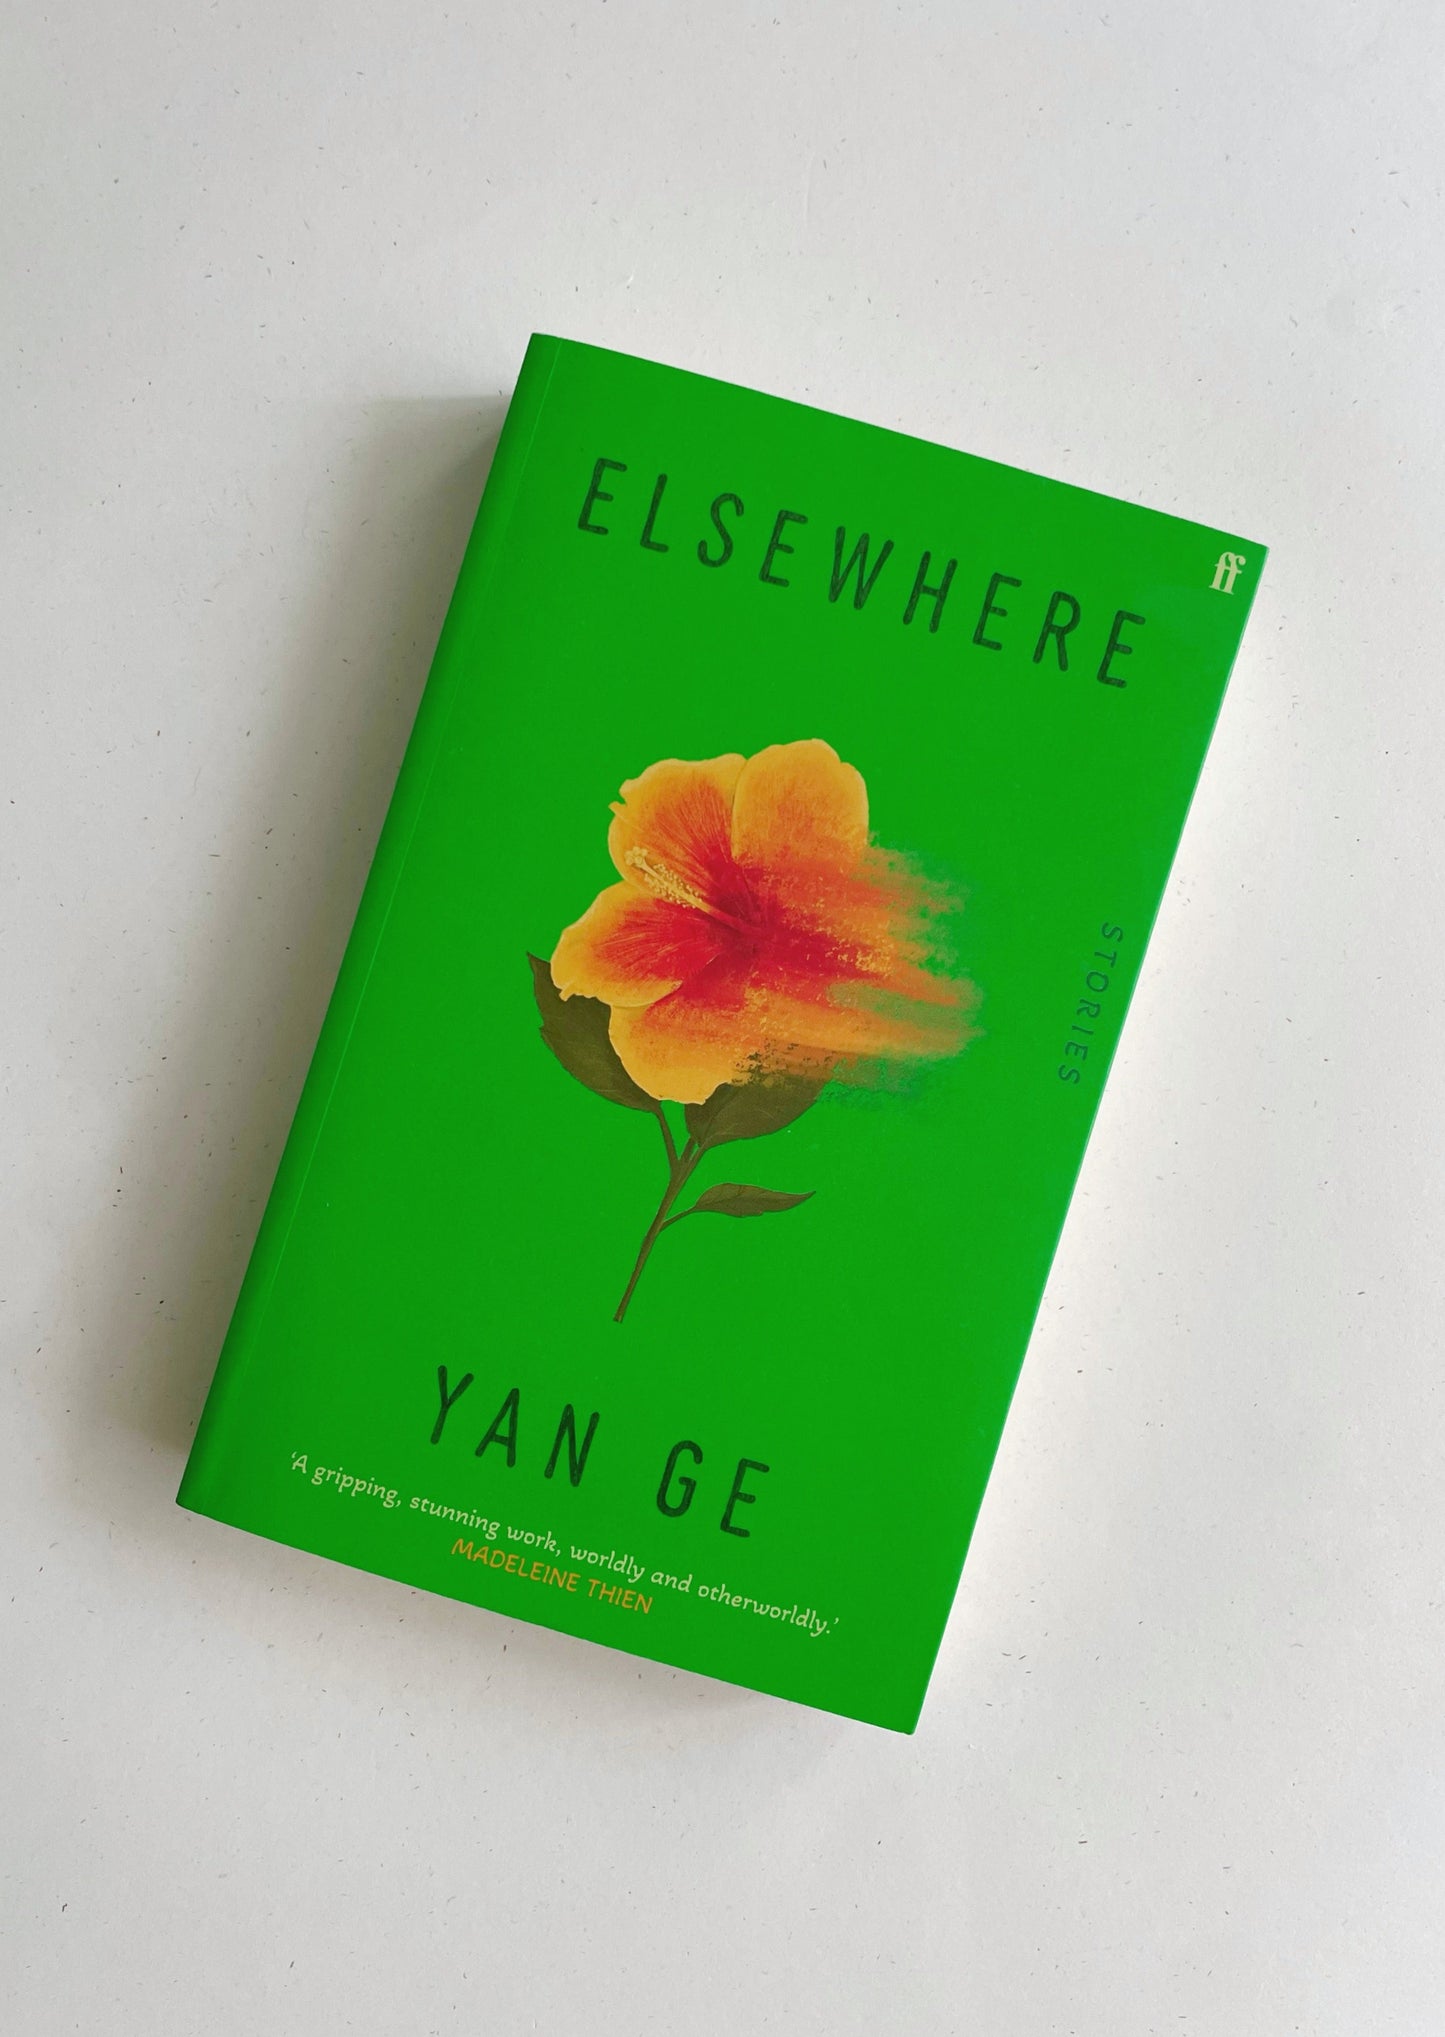 Elsewhere, Yan Ge